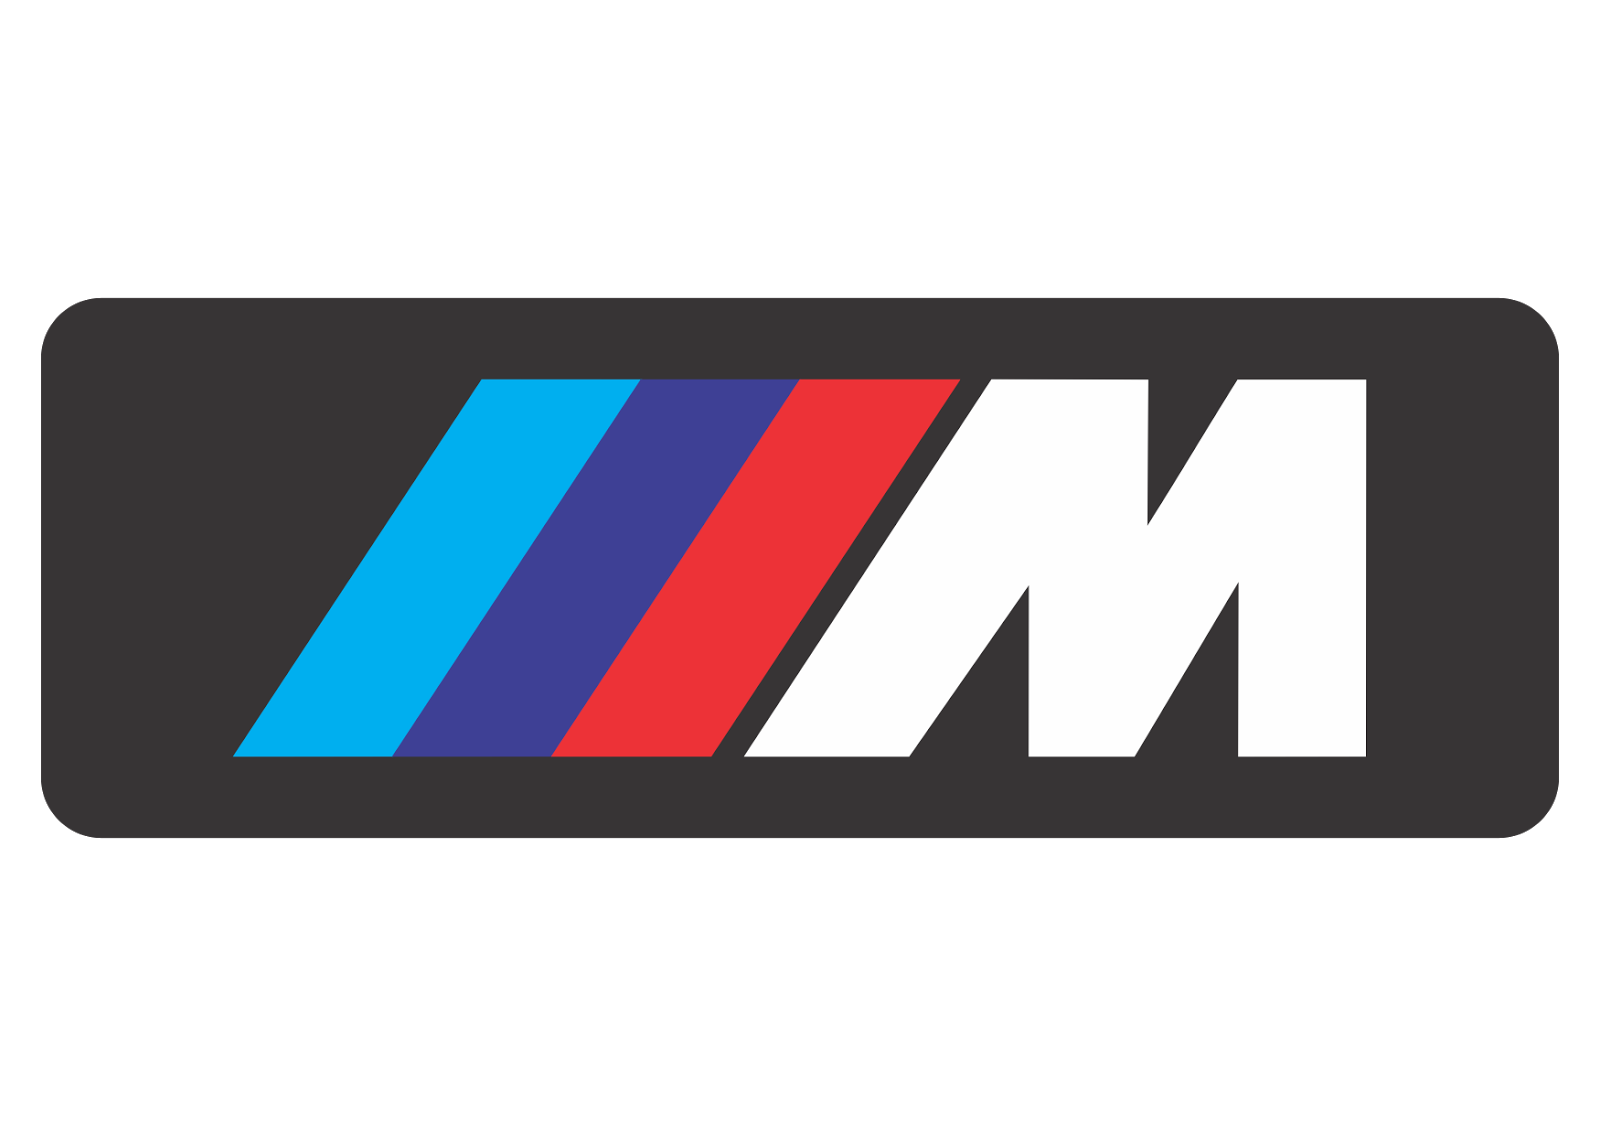 Bmw motorsport logo eps #2